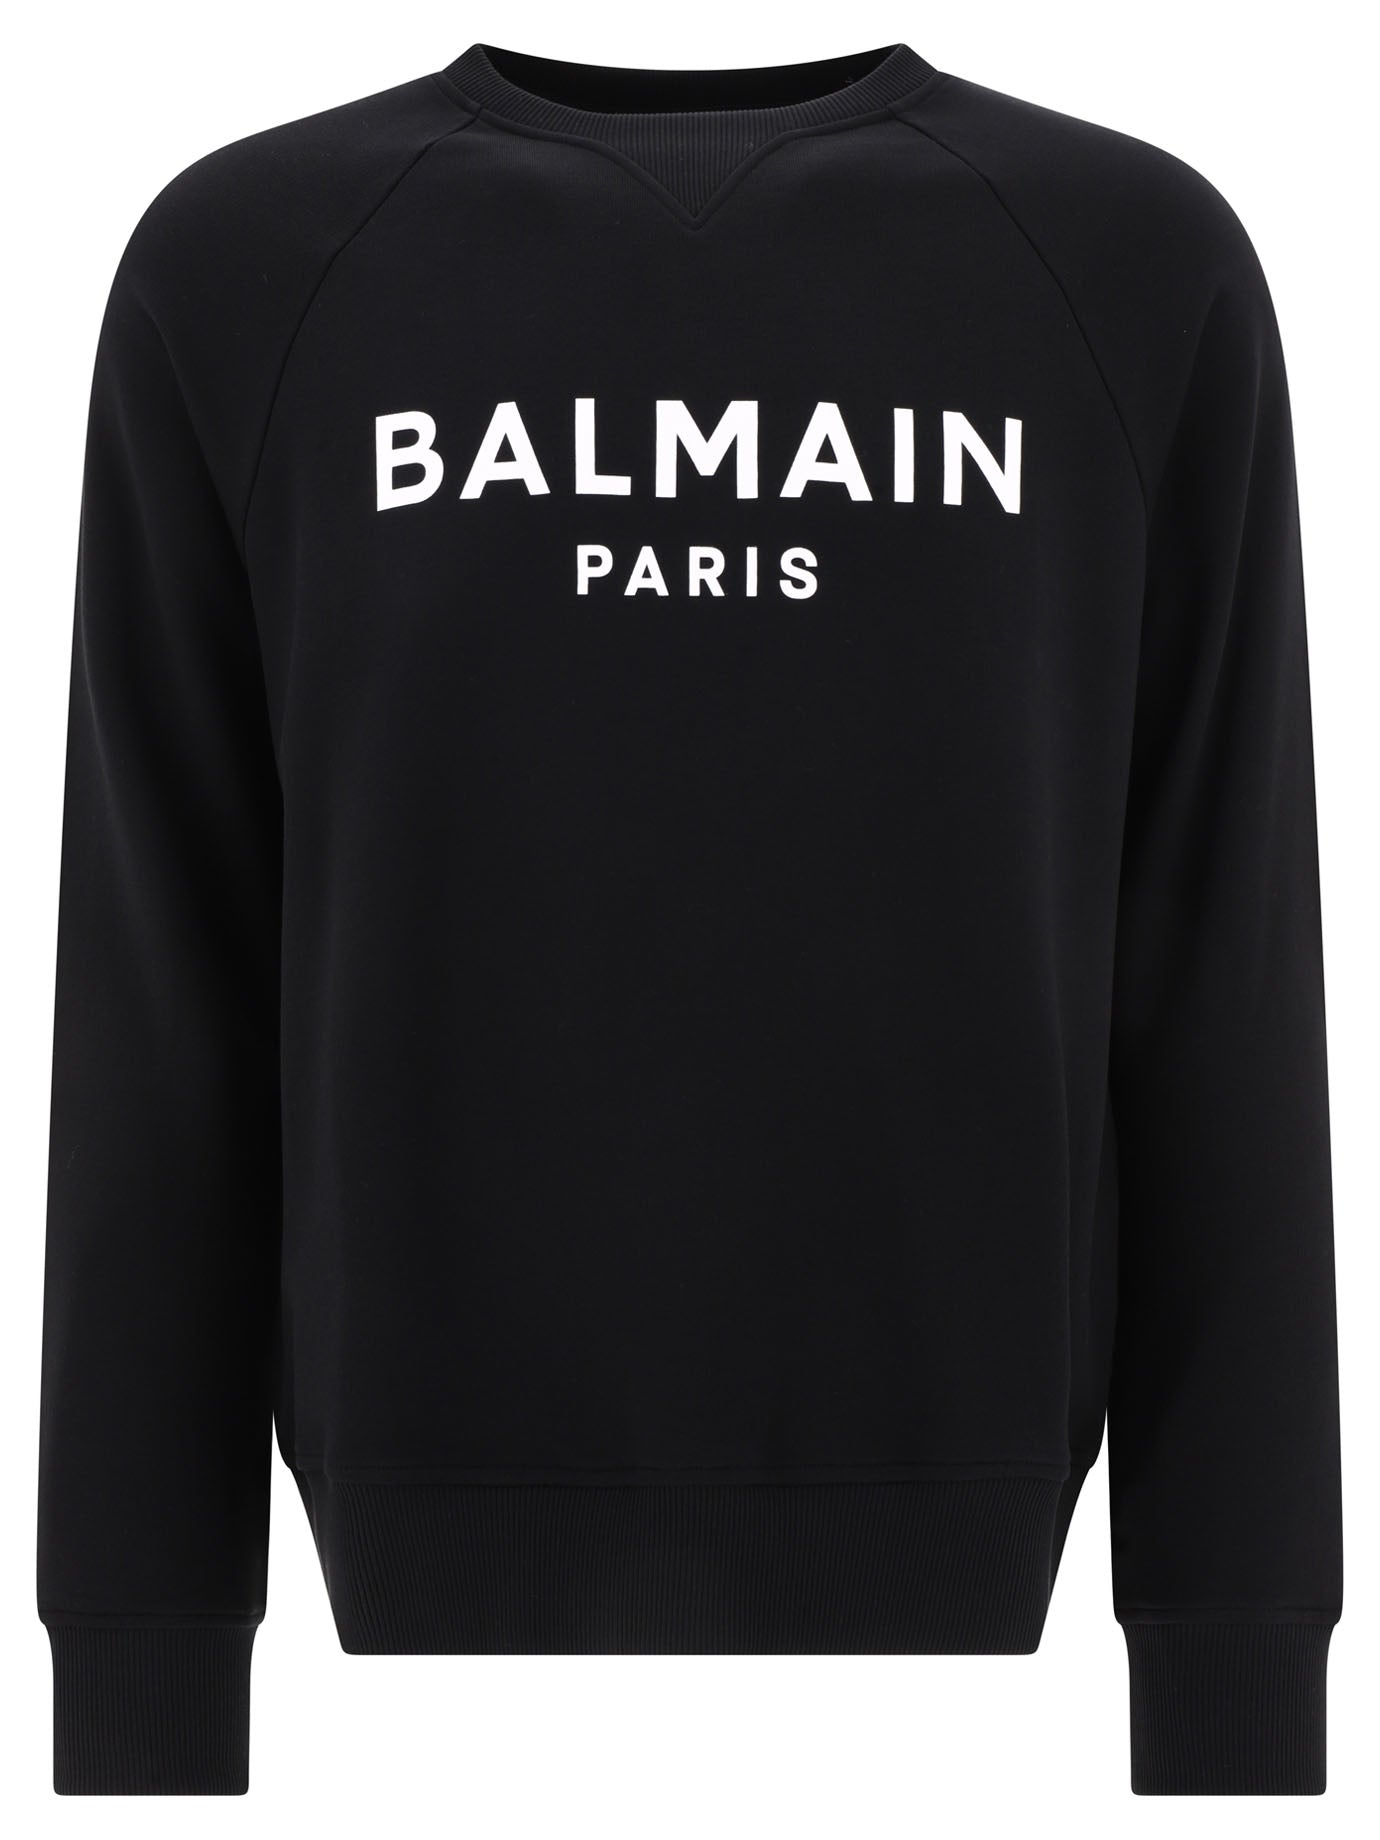 Balmain Paris Sweatshirts In Black